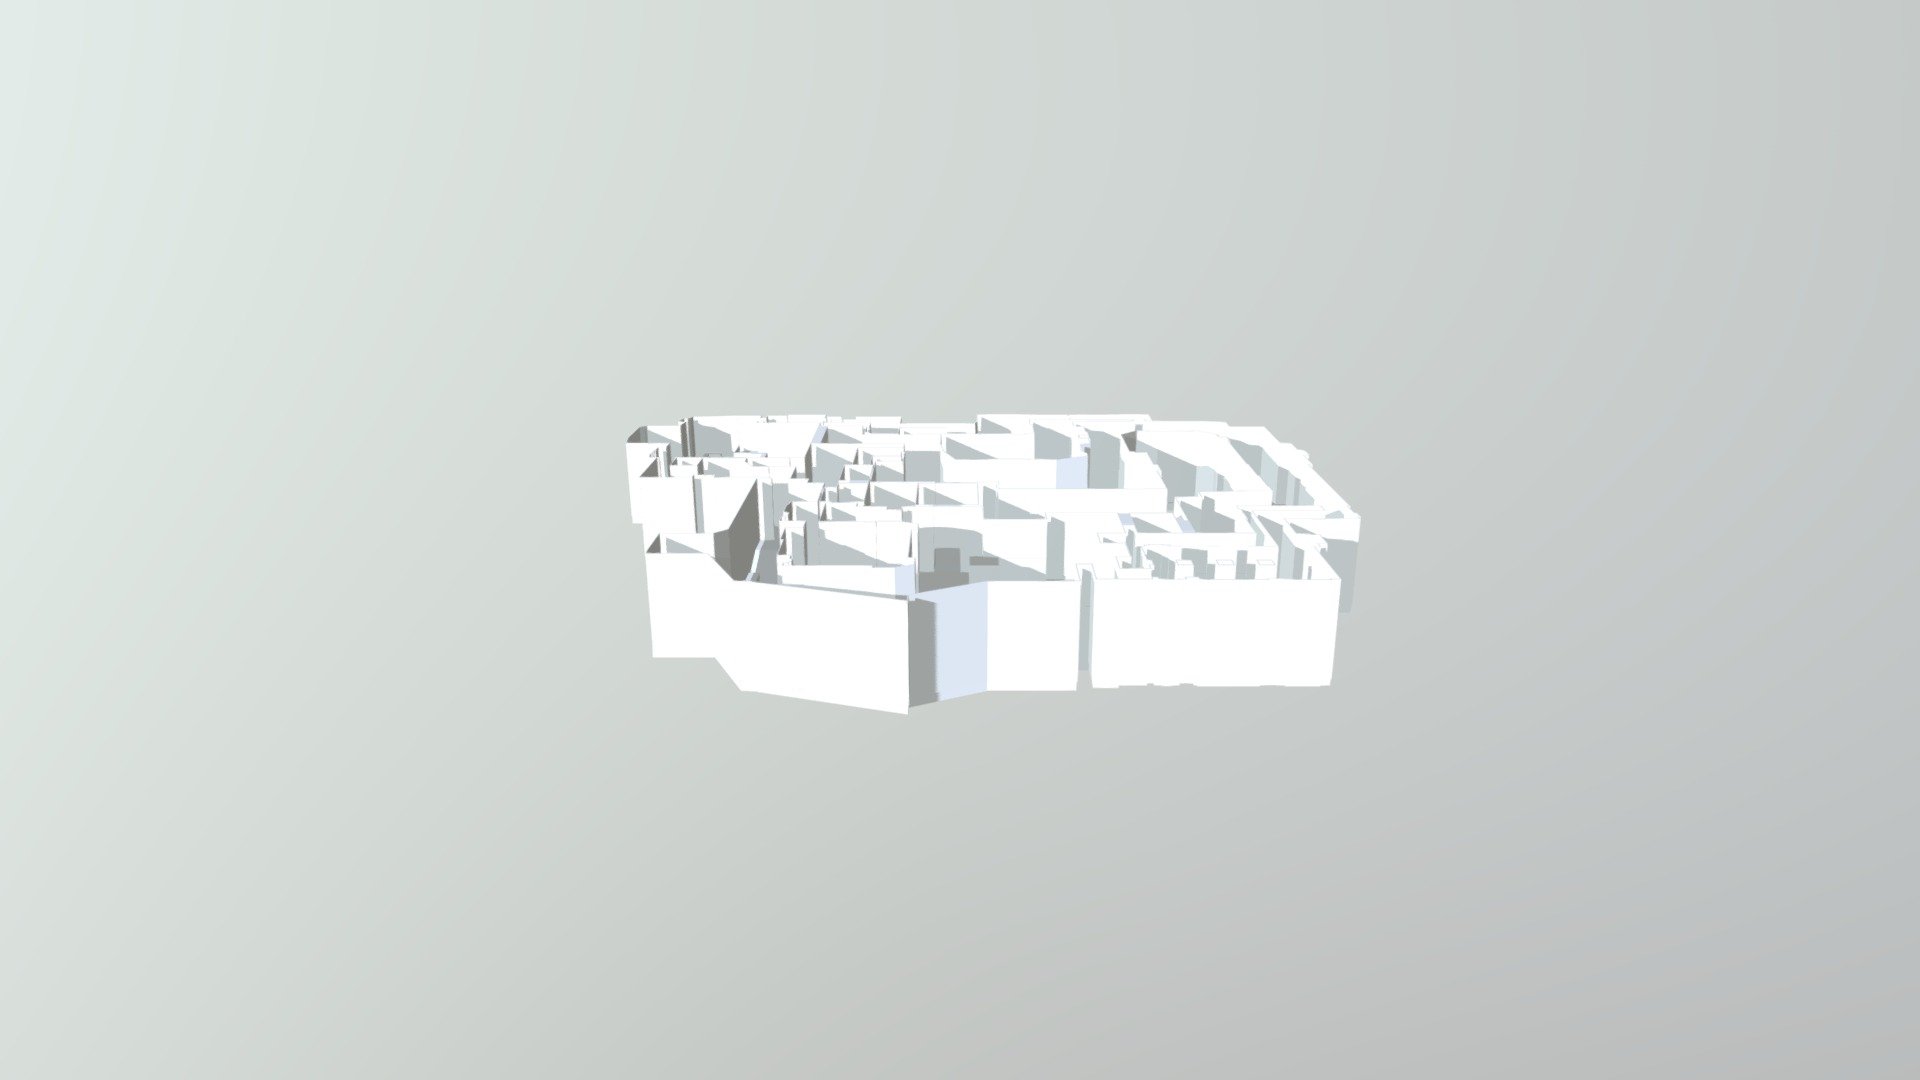 CS:GO Maap Mirage - 3D model by Simondin Florian (@Astromoos) 3d model